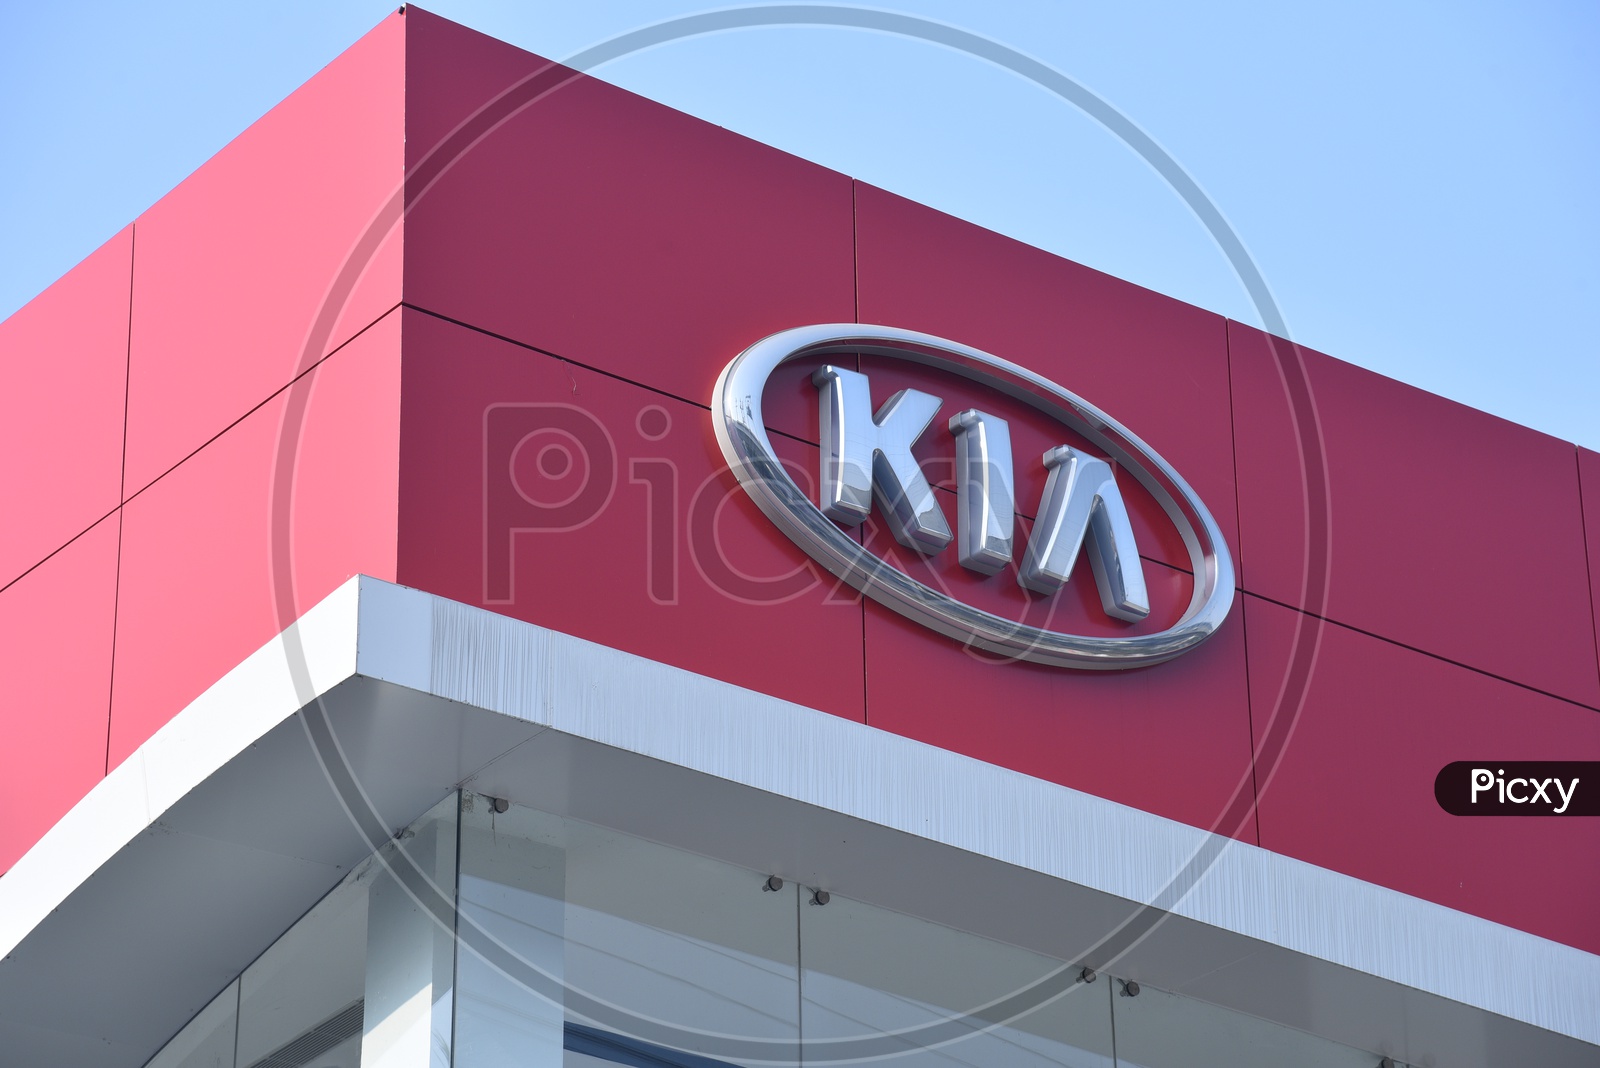 KIA Motors Car Showroom or Outlet